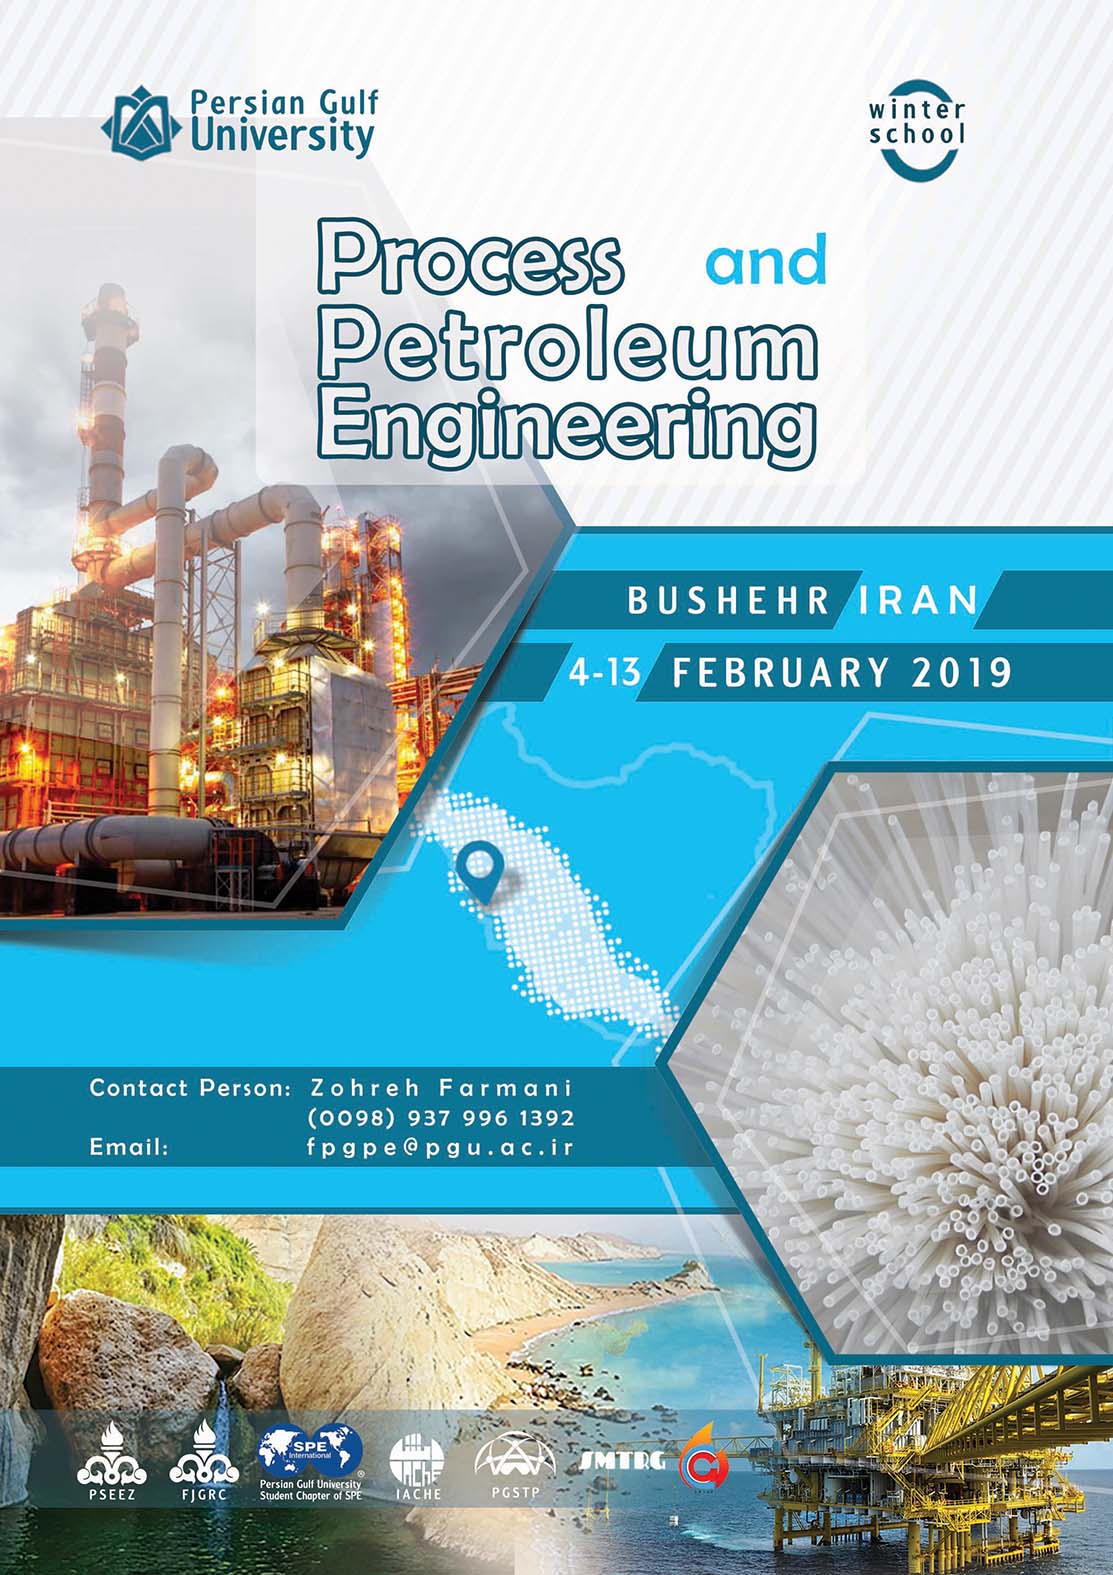  Process and Petroleum Engineering Winter School in Iran 